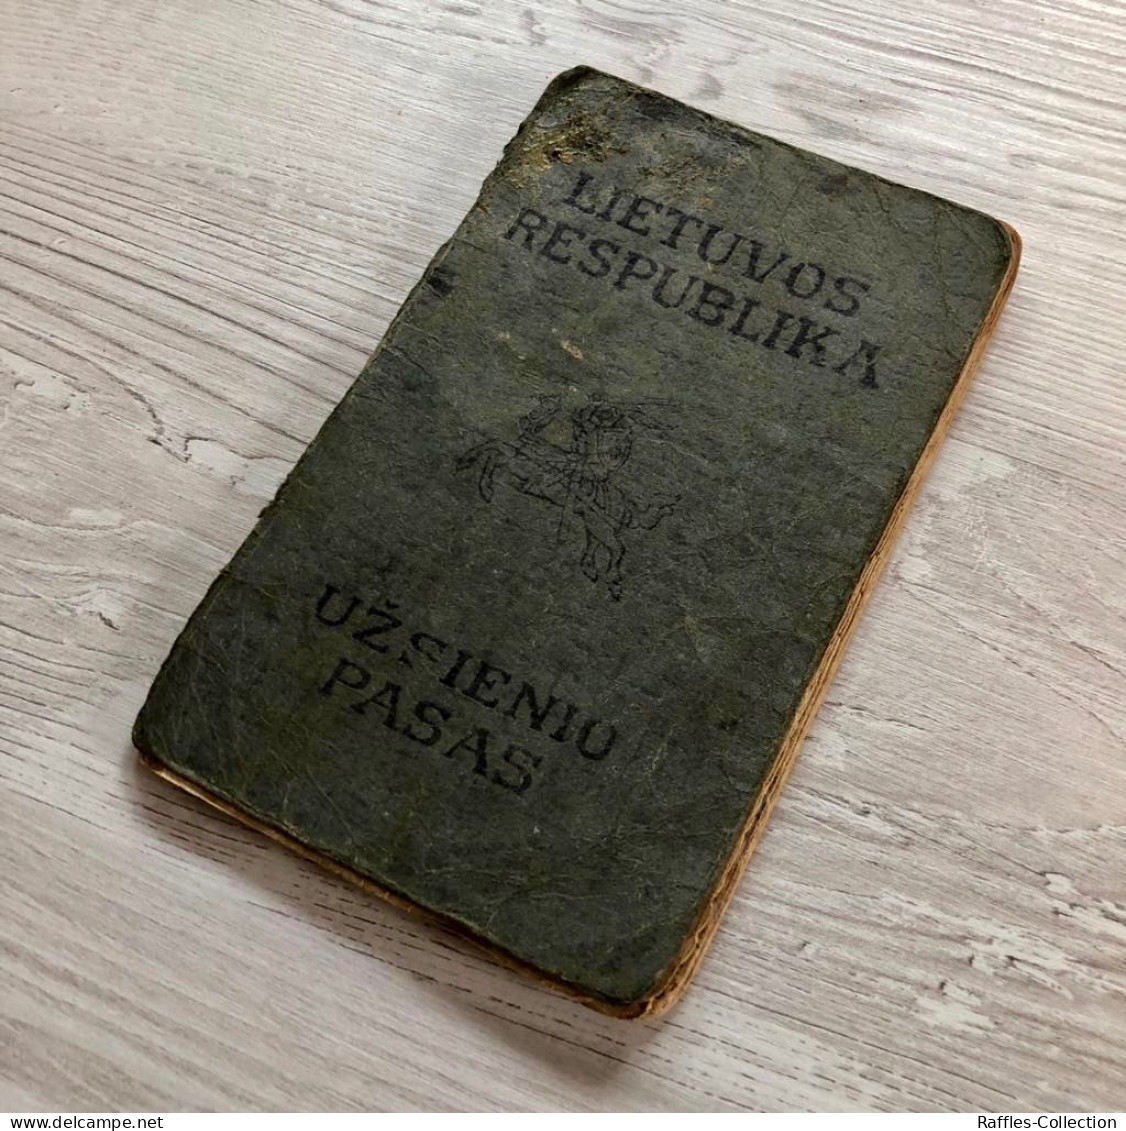 Lithuania 1931 Passport For A Jewish Lady Issued In Kovno - Palestine Visa Passeport Reisepass Pasaporte Passaporto - Historische Dokumente